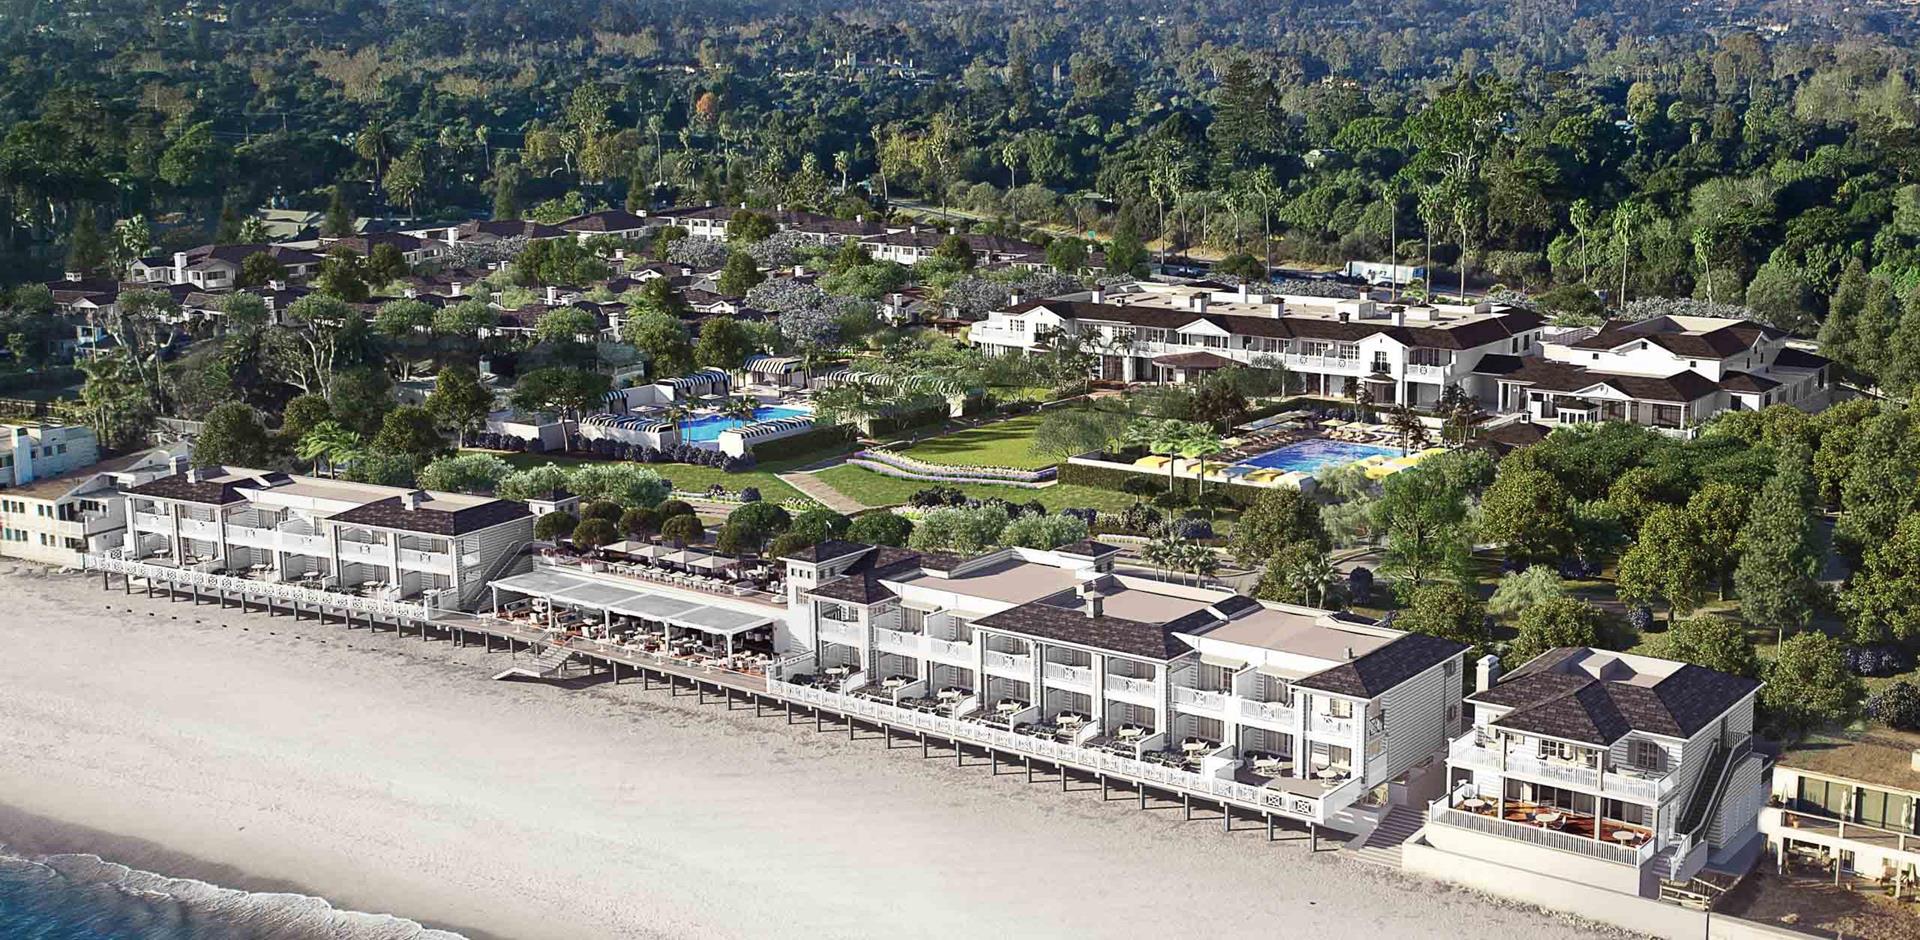 Aerial view of Rosewood Miramar Beach, California, USA